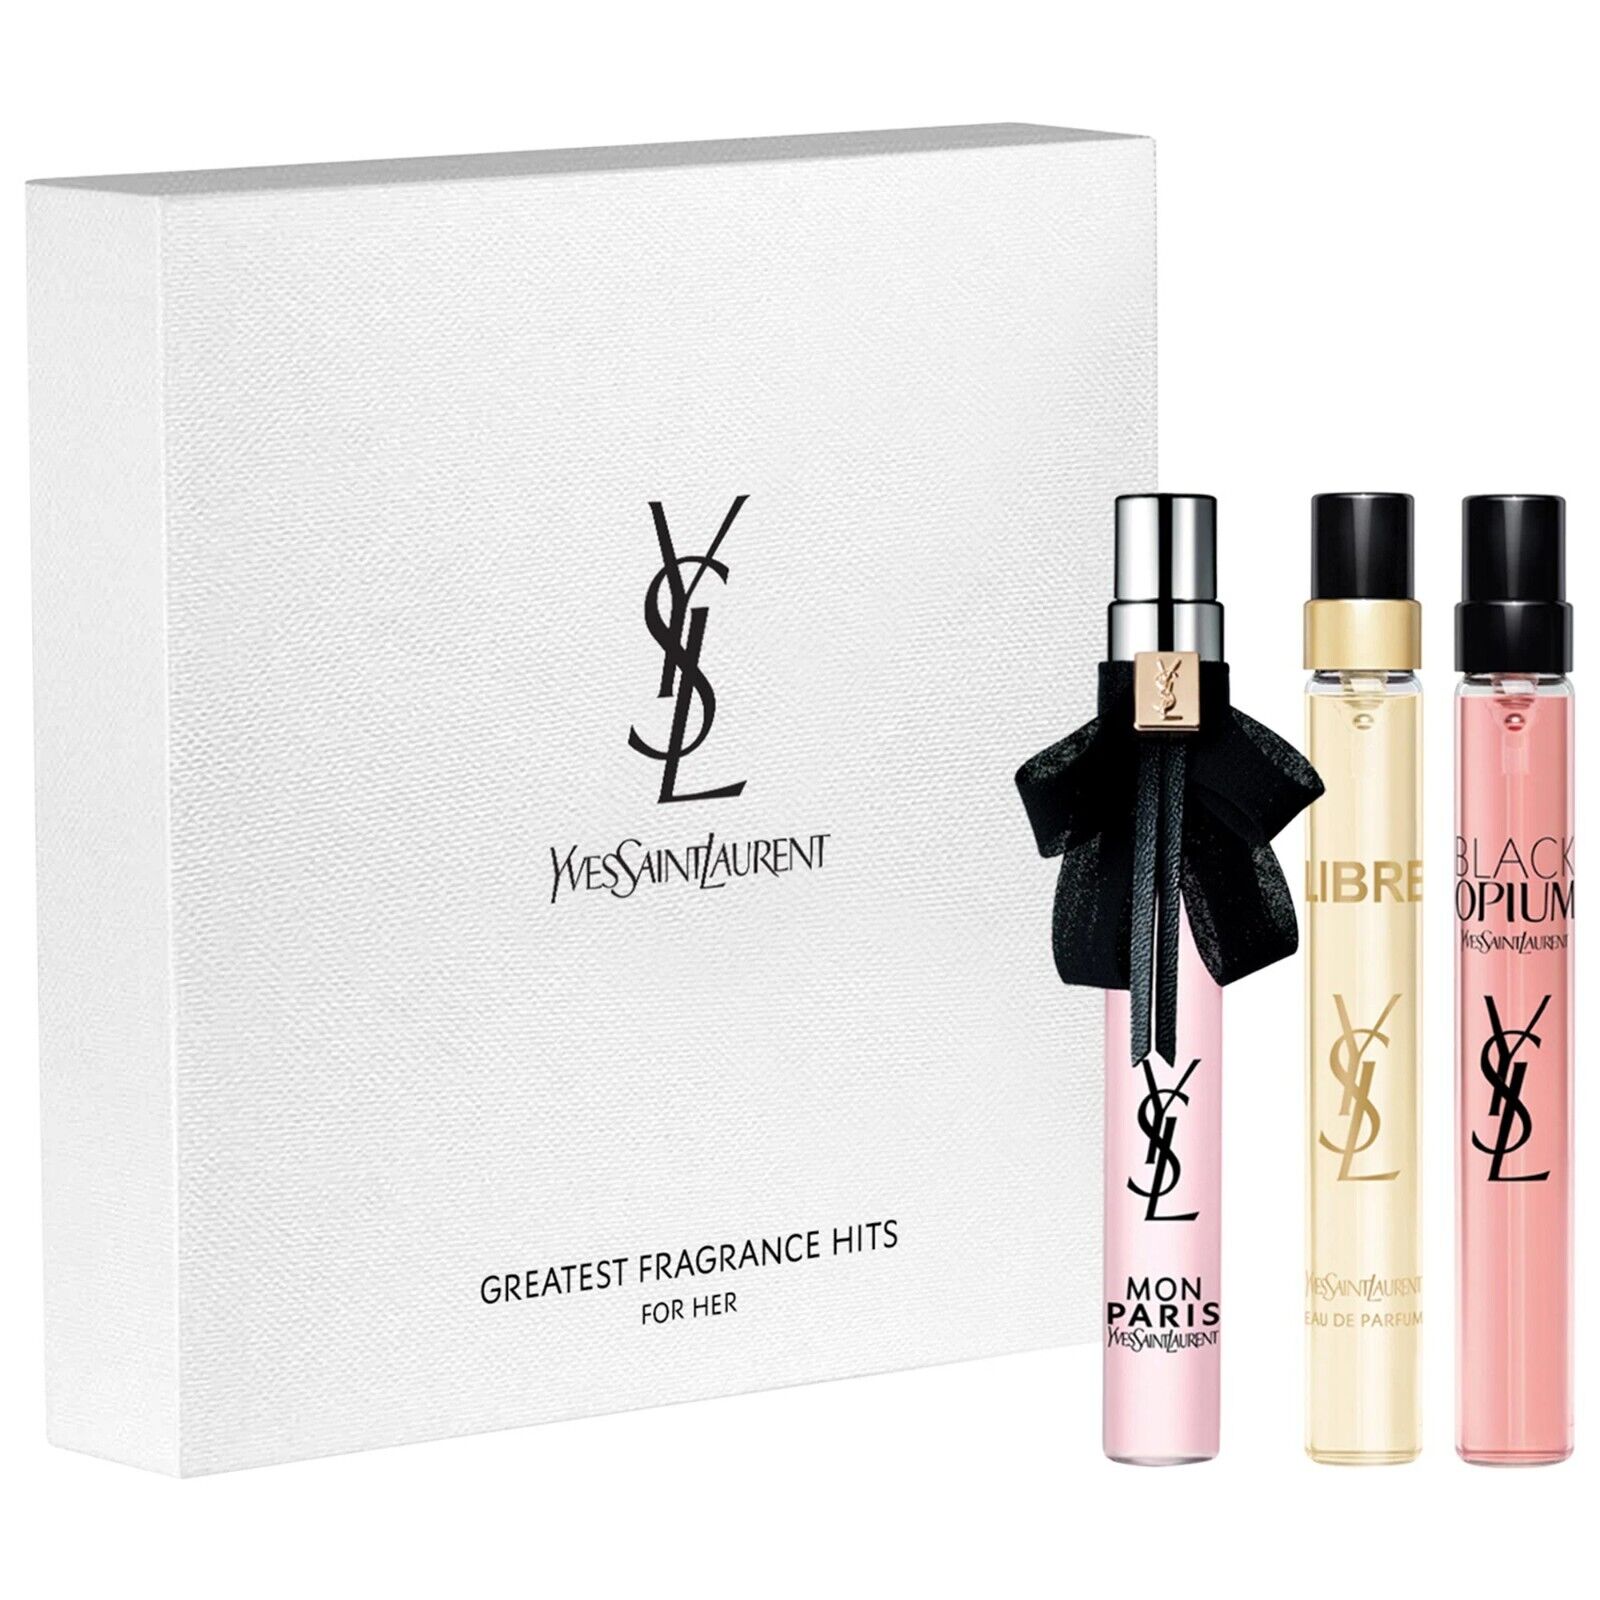 Yves Saint Laurent Women's Perfume Travel Trio Set